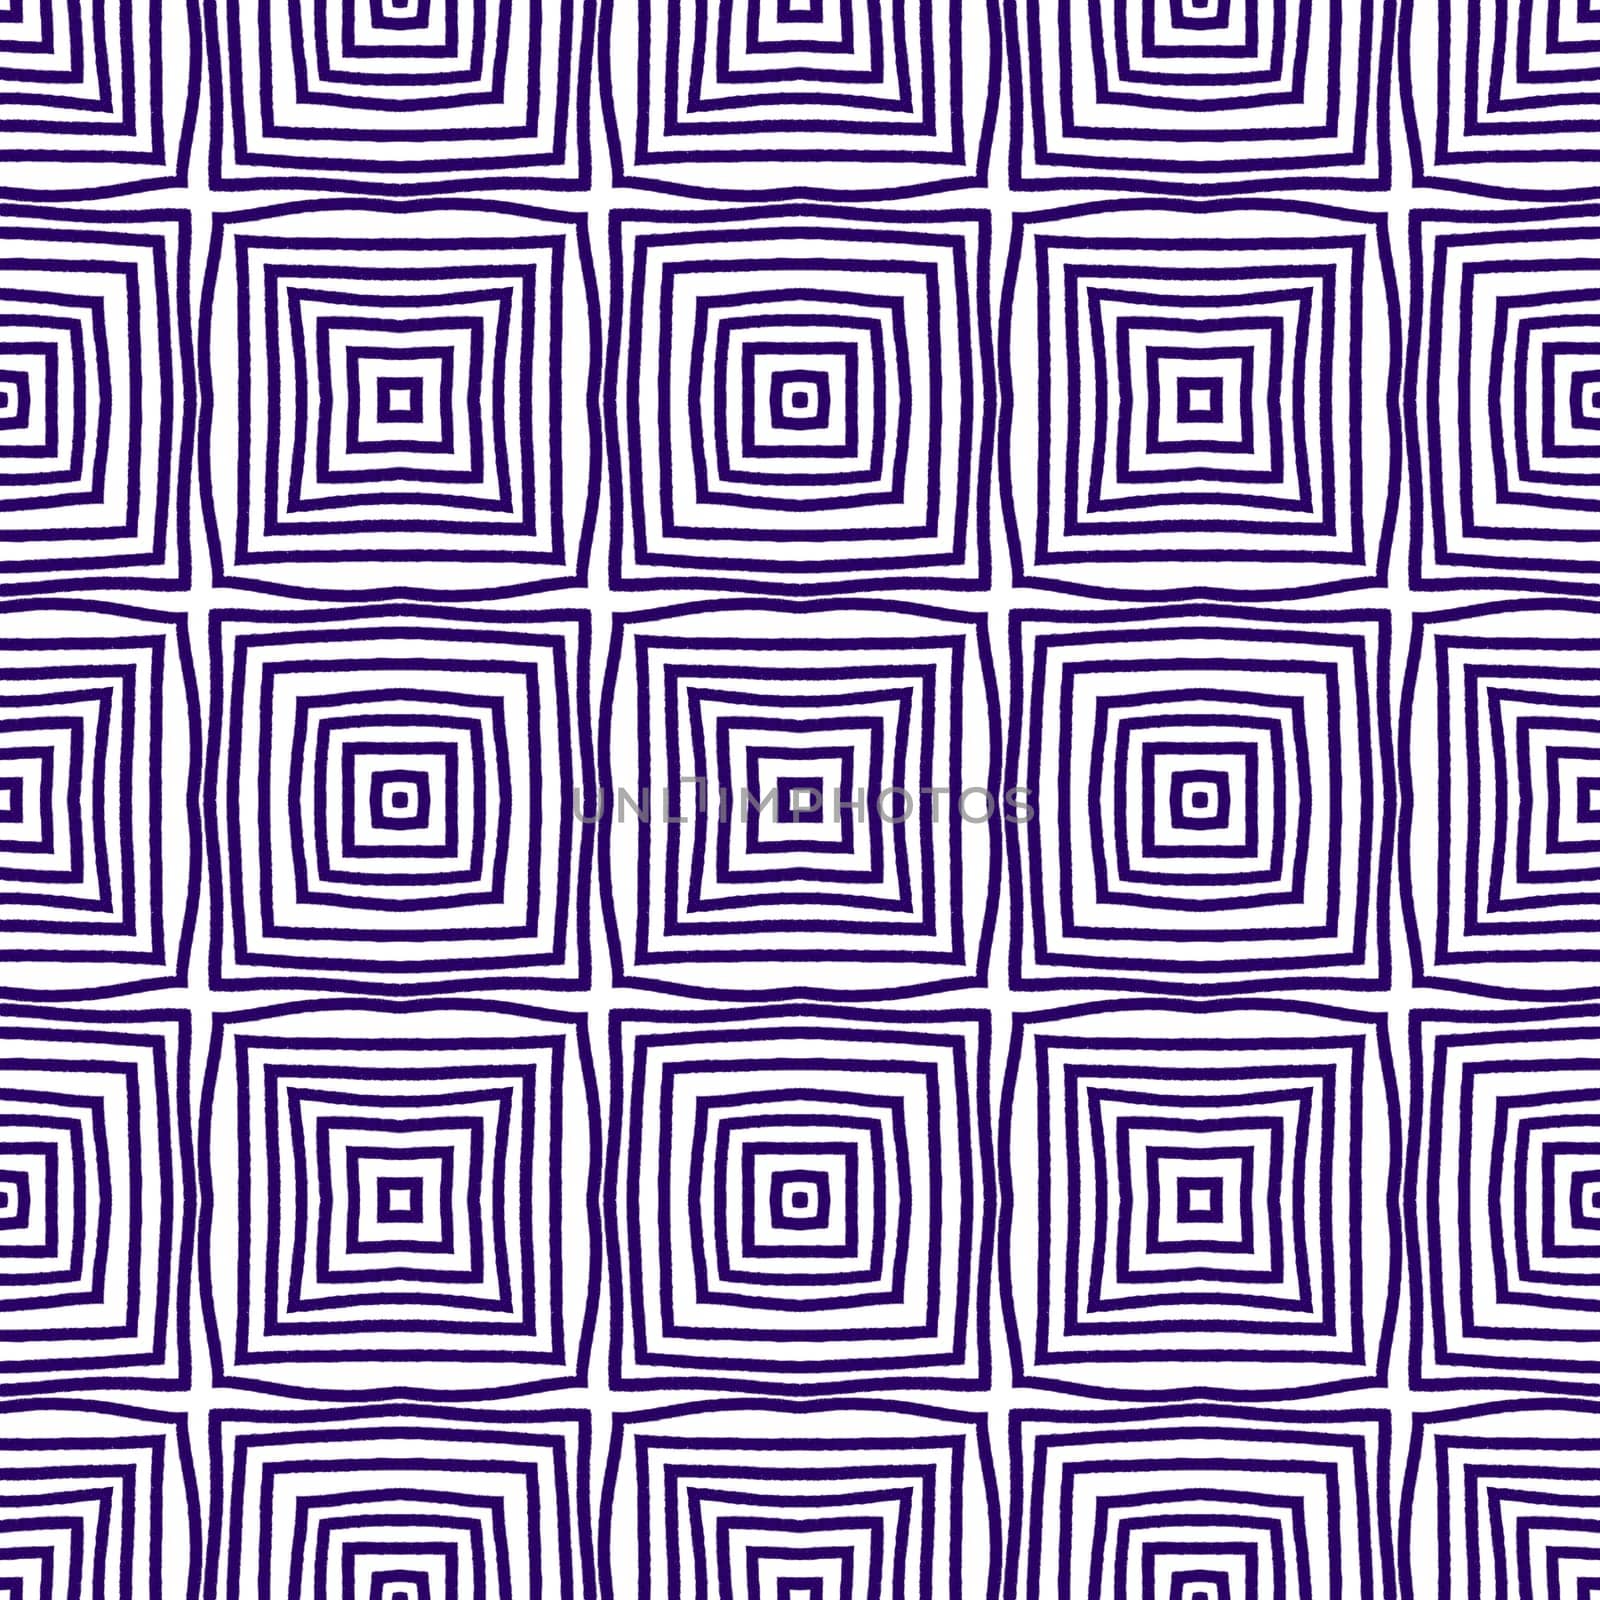 Geometric seamless pattern. Purple symmetrical by beginagain